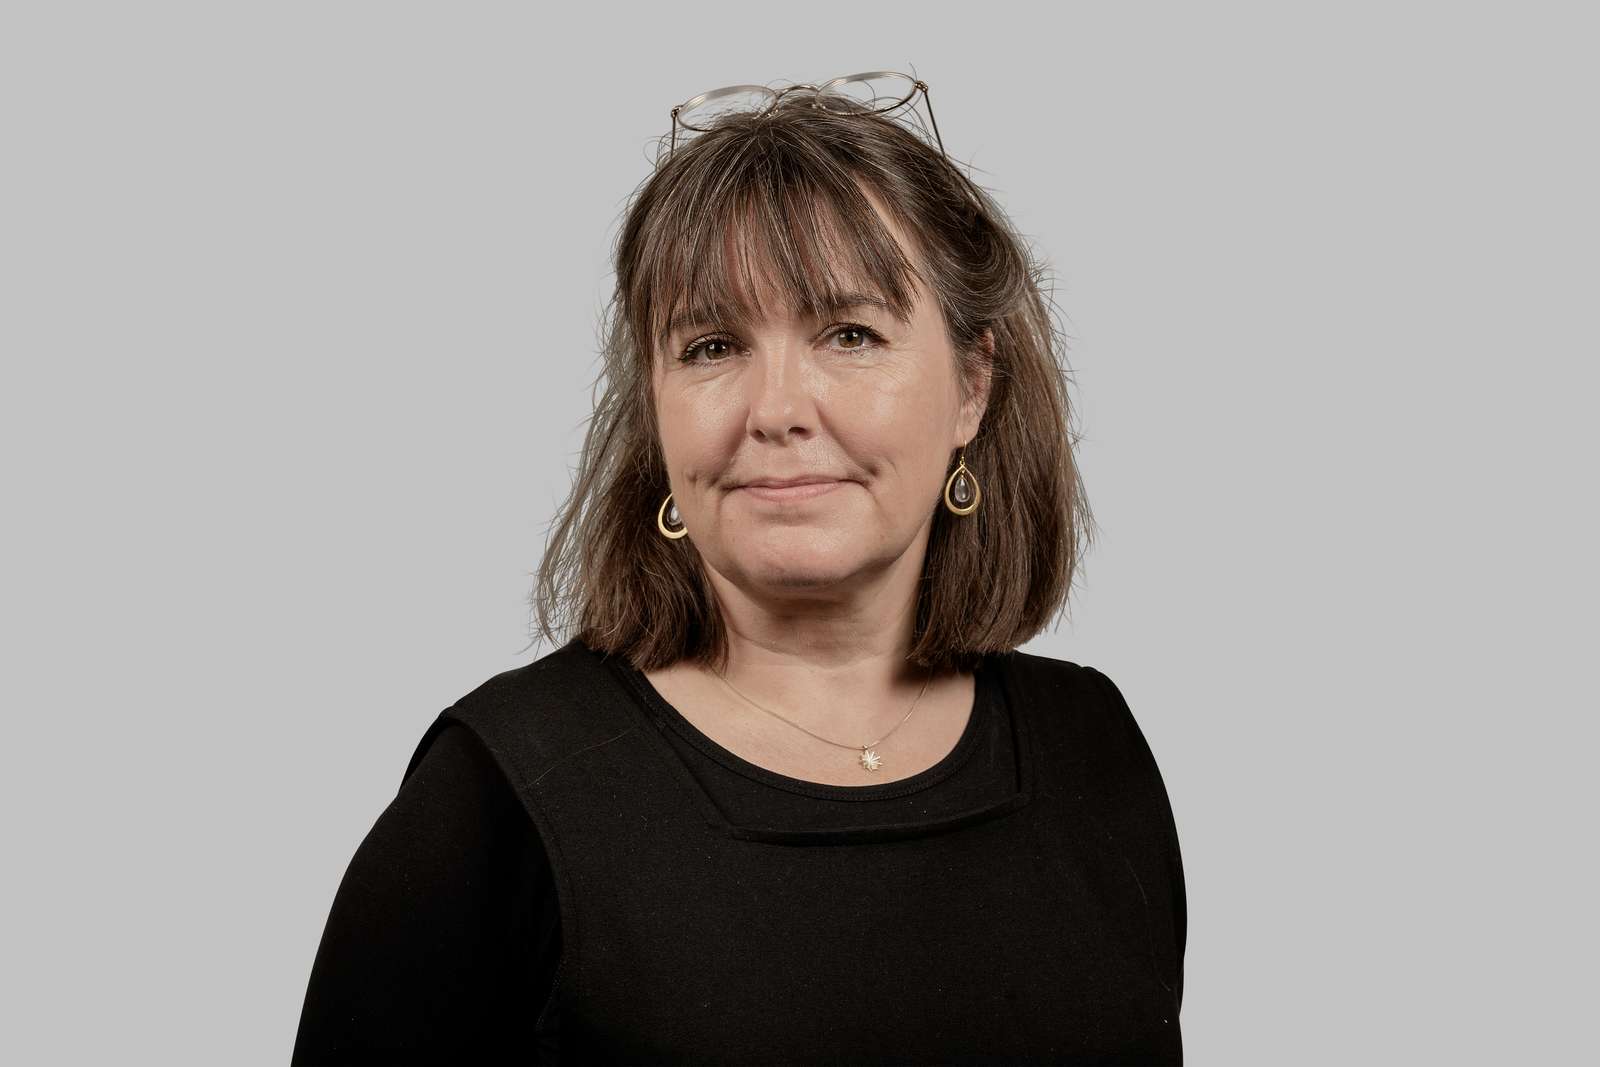 Karoline Klaksvig - Direktør for Plan, Kultur og Teknik.jpg